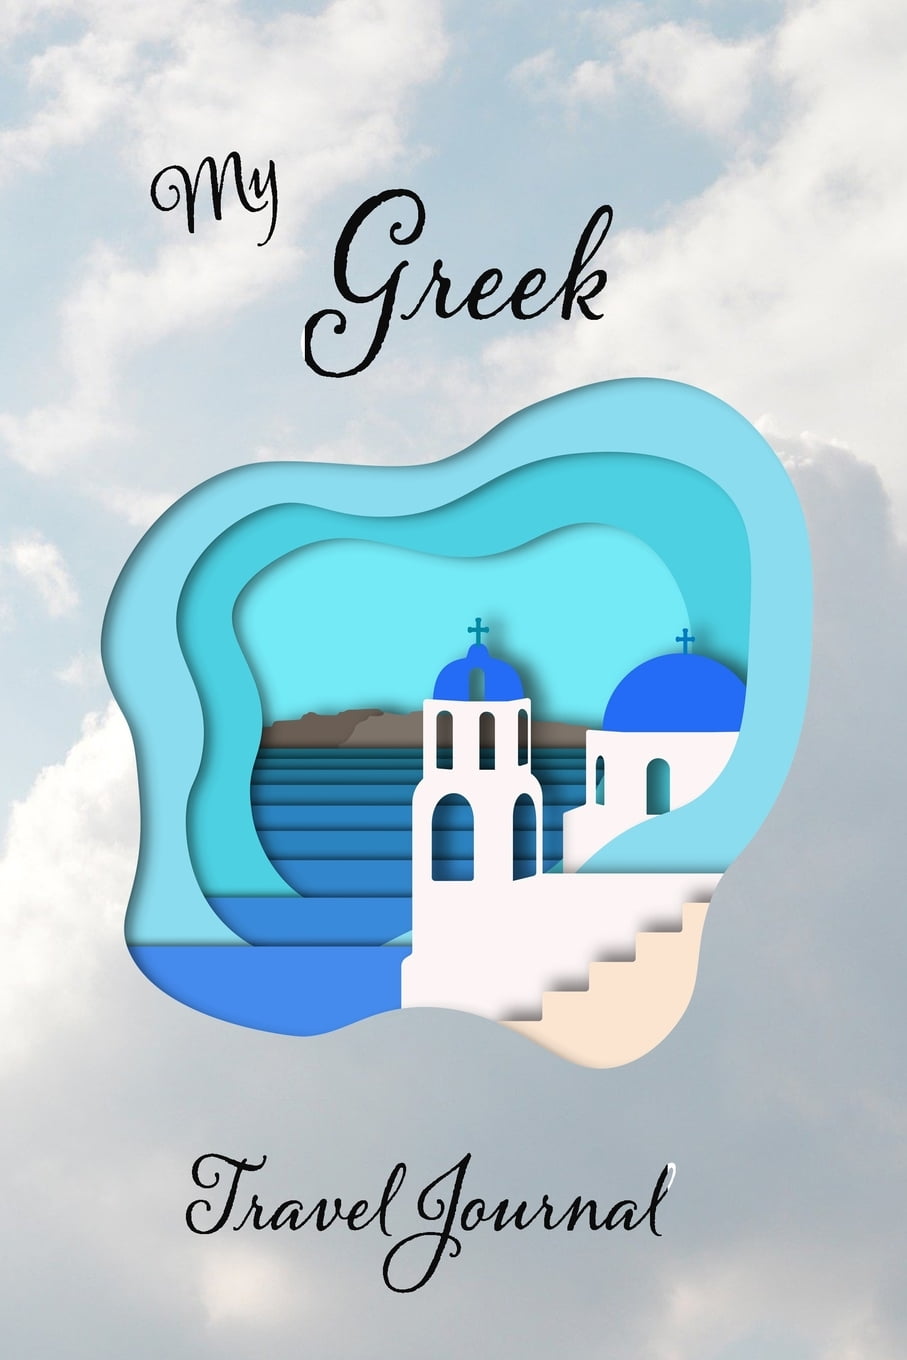 greece travel diary